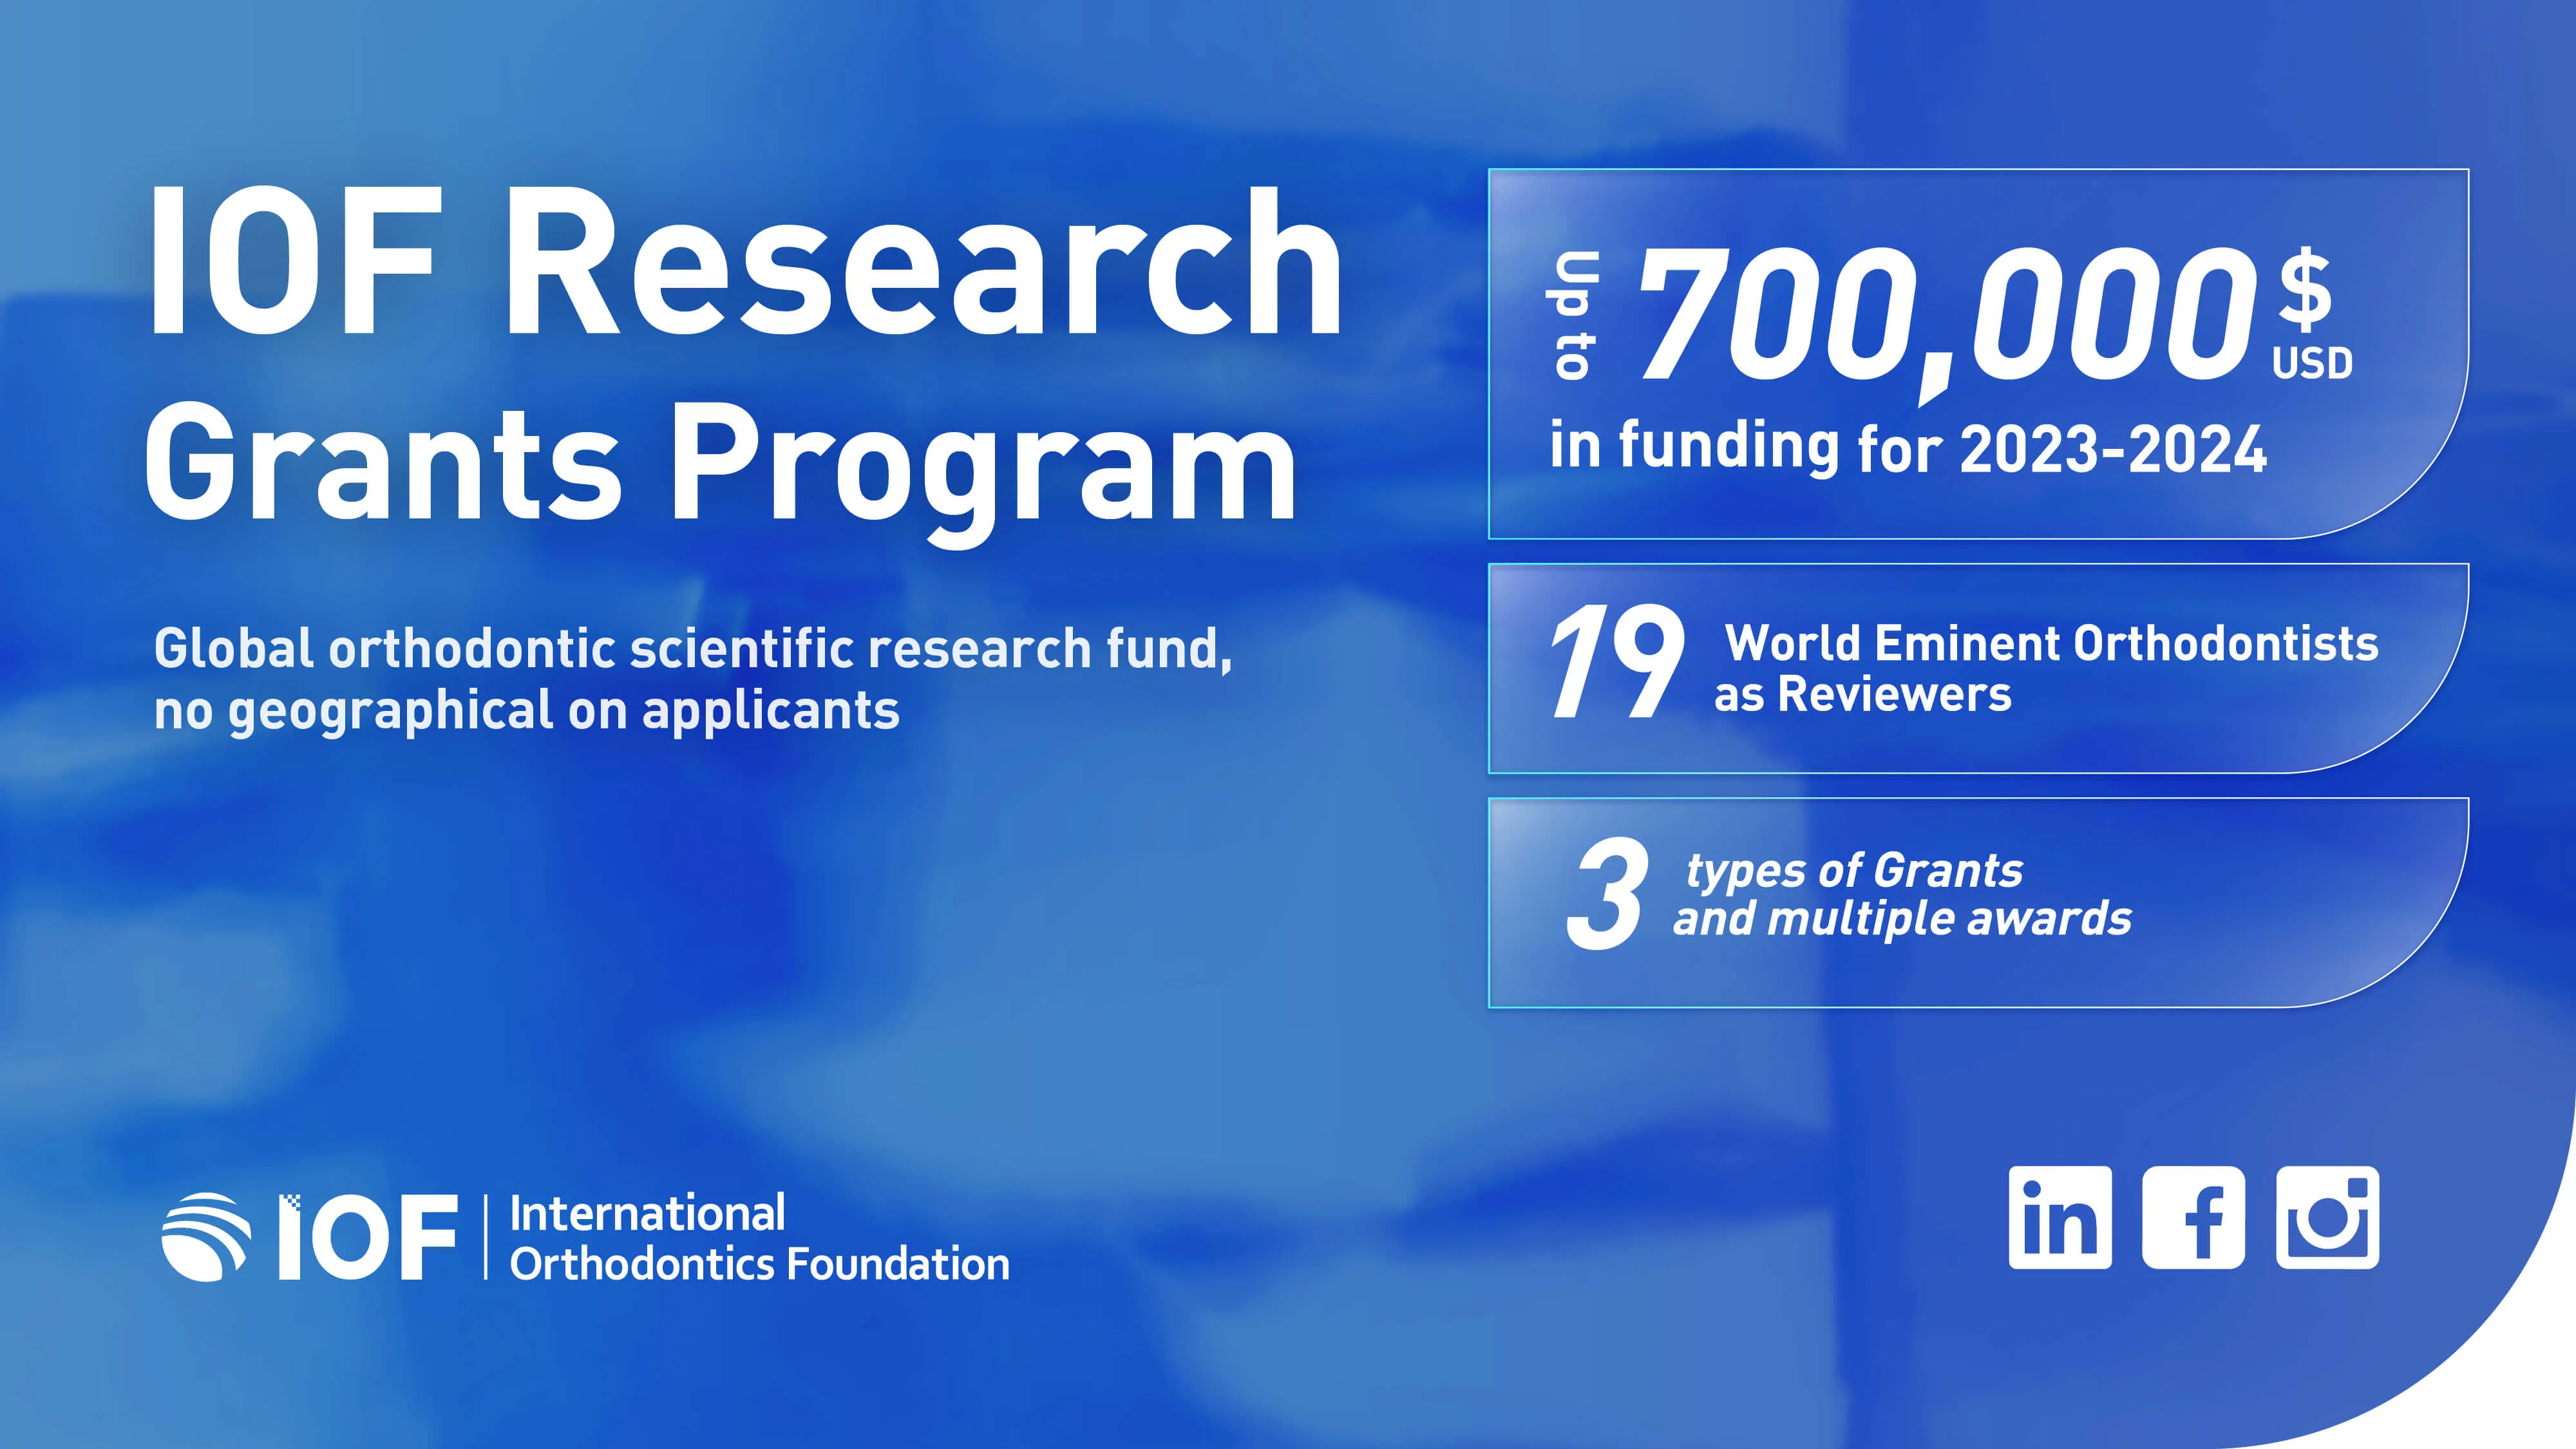 iof research grants program background